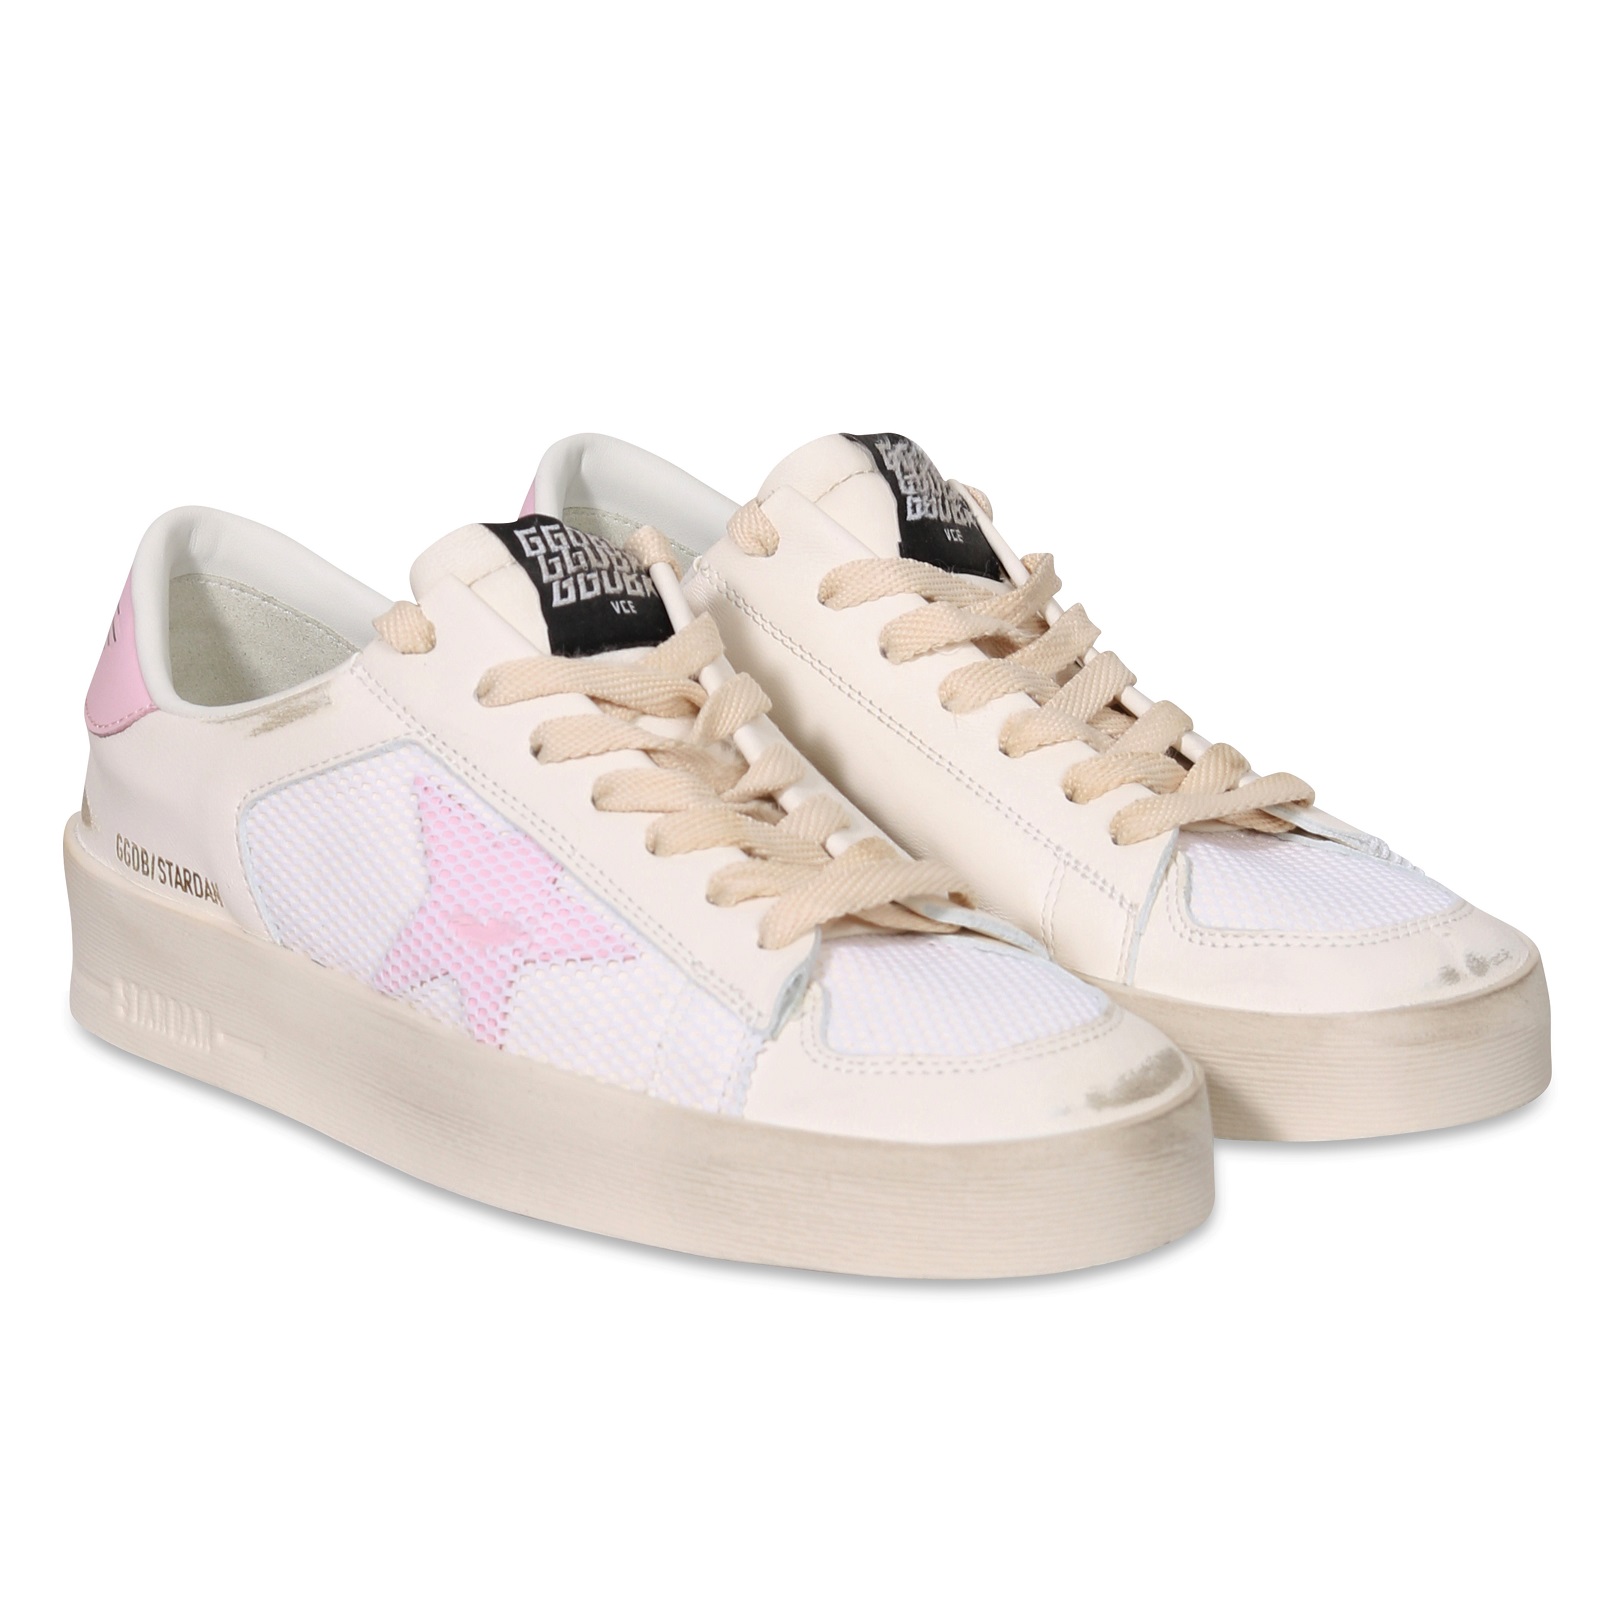 GOLDEN GOOSE Sneaker Stardan in White/Orchid Pink 40